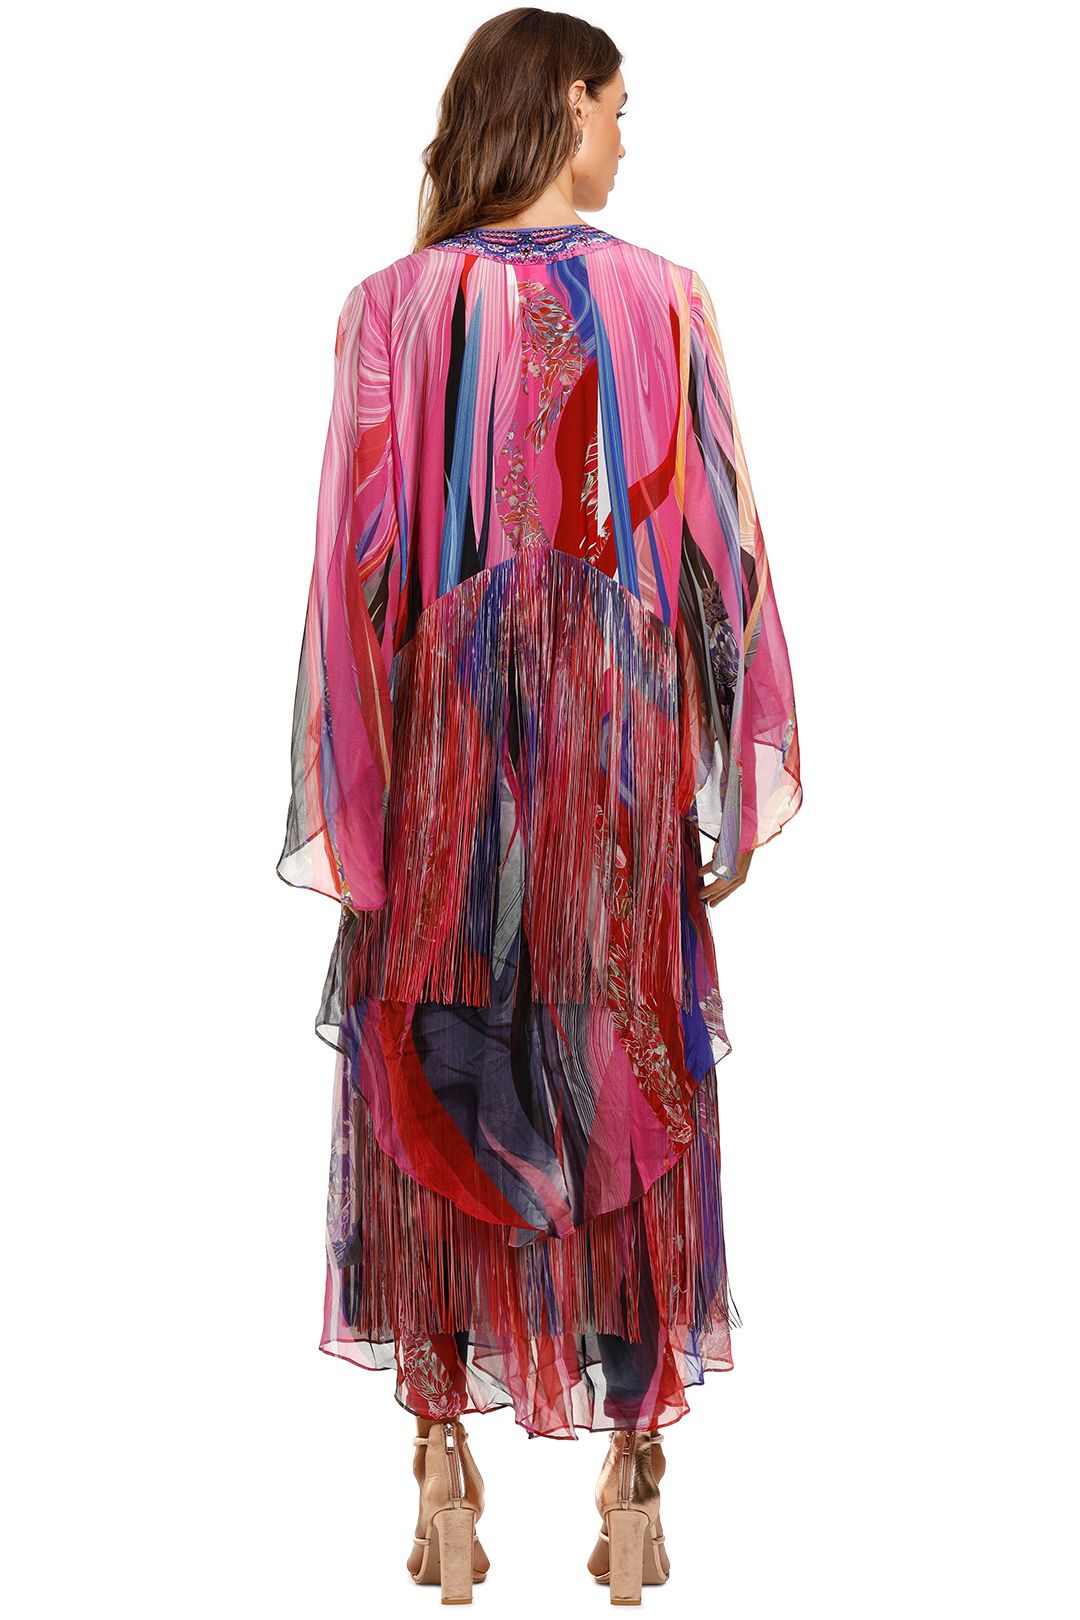 Camilla Robe With Double Layered Hem Folk River Boho Outerwear